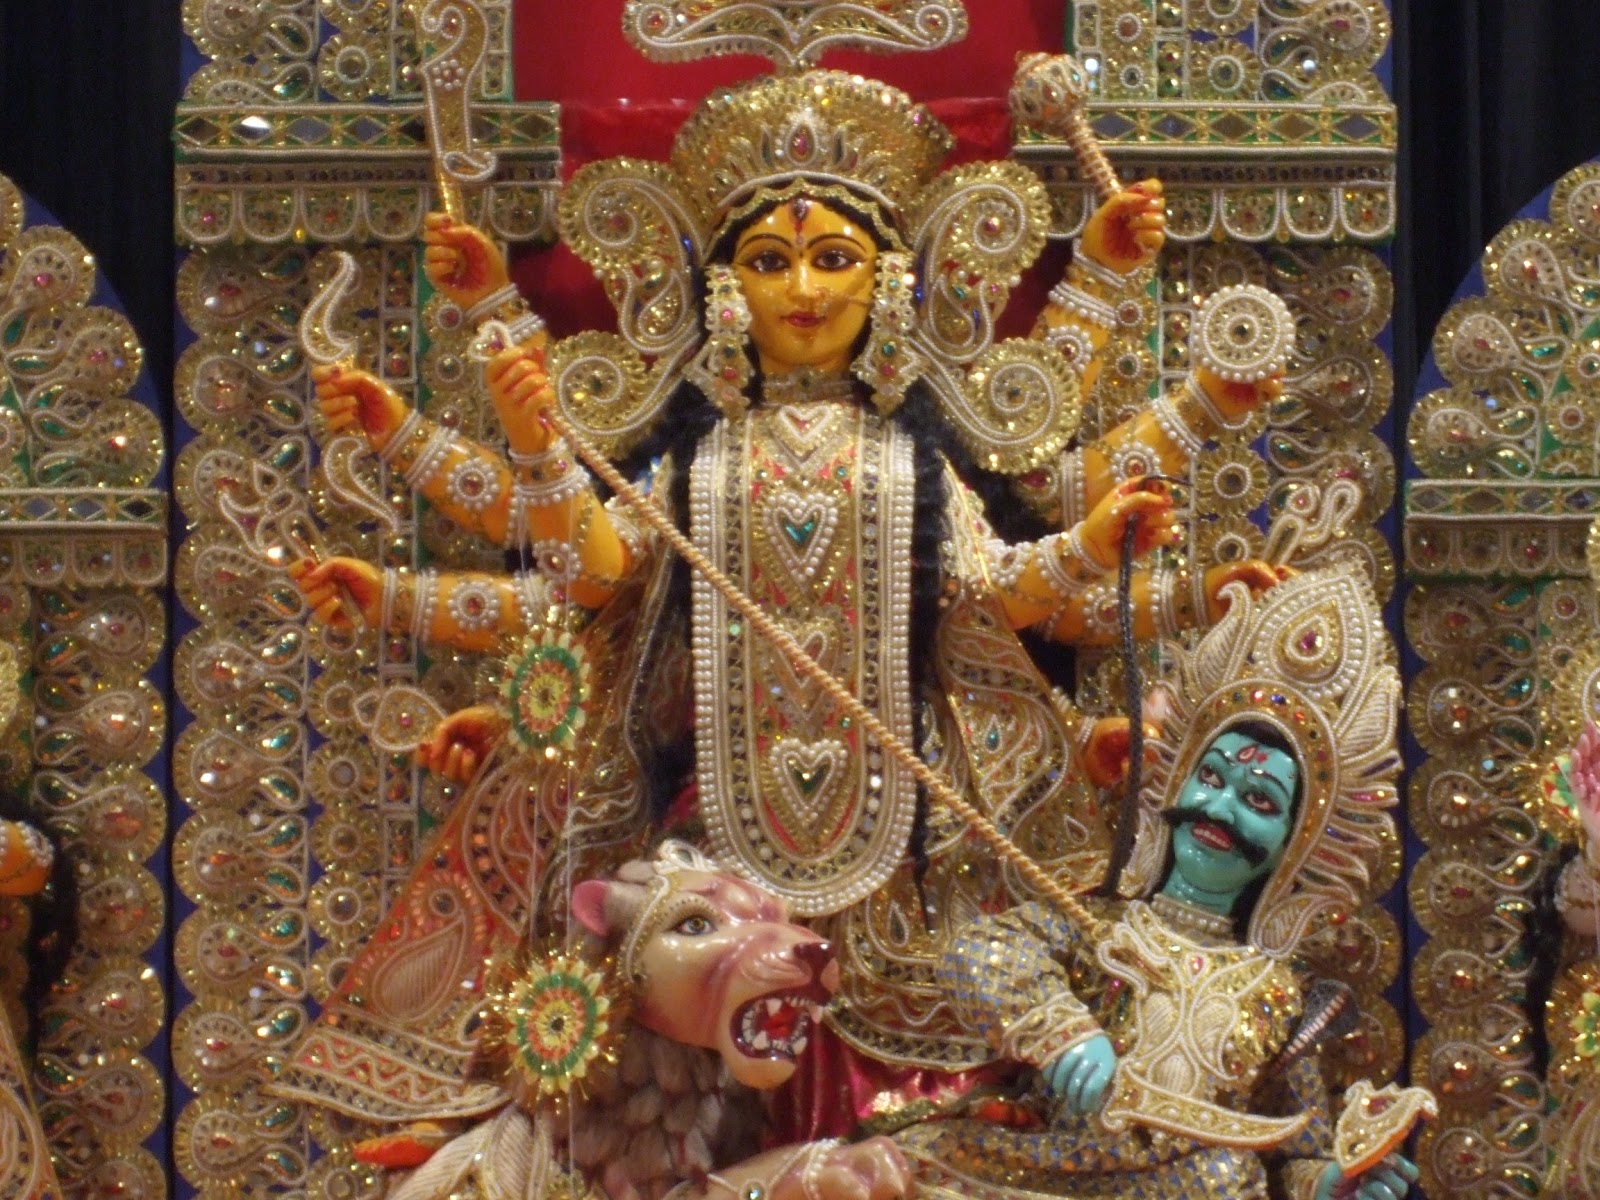 Bhagwan Ji Help me: Durga Maa Images, Wallpapers, Backgrounds, Photographs